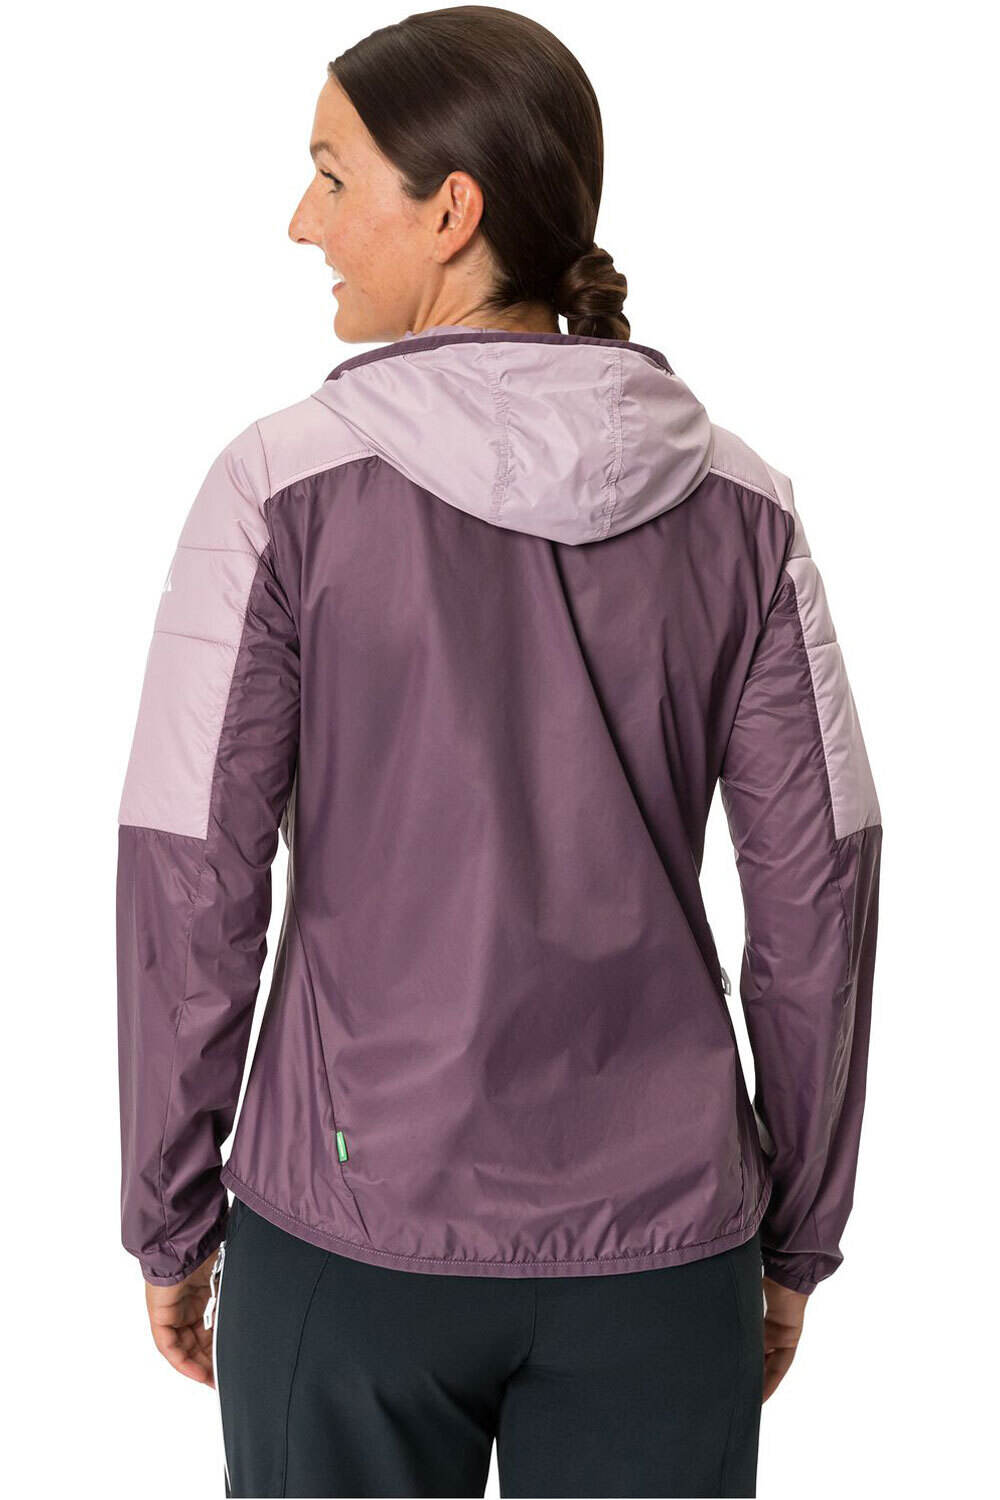 Vaude chaqueta impermeable ciclismo mujer Women's Minaki Light Jacket vista trasera